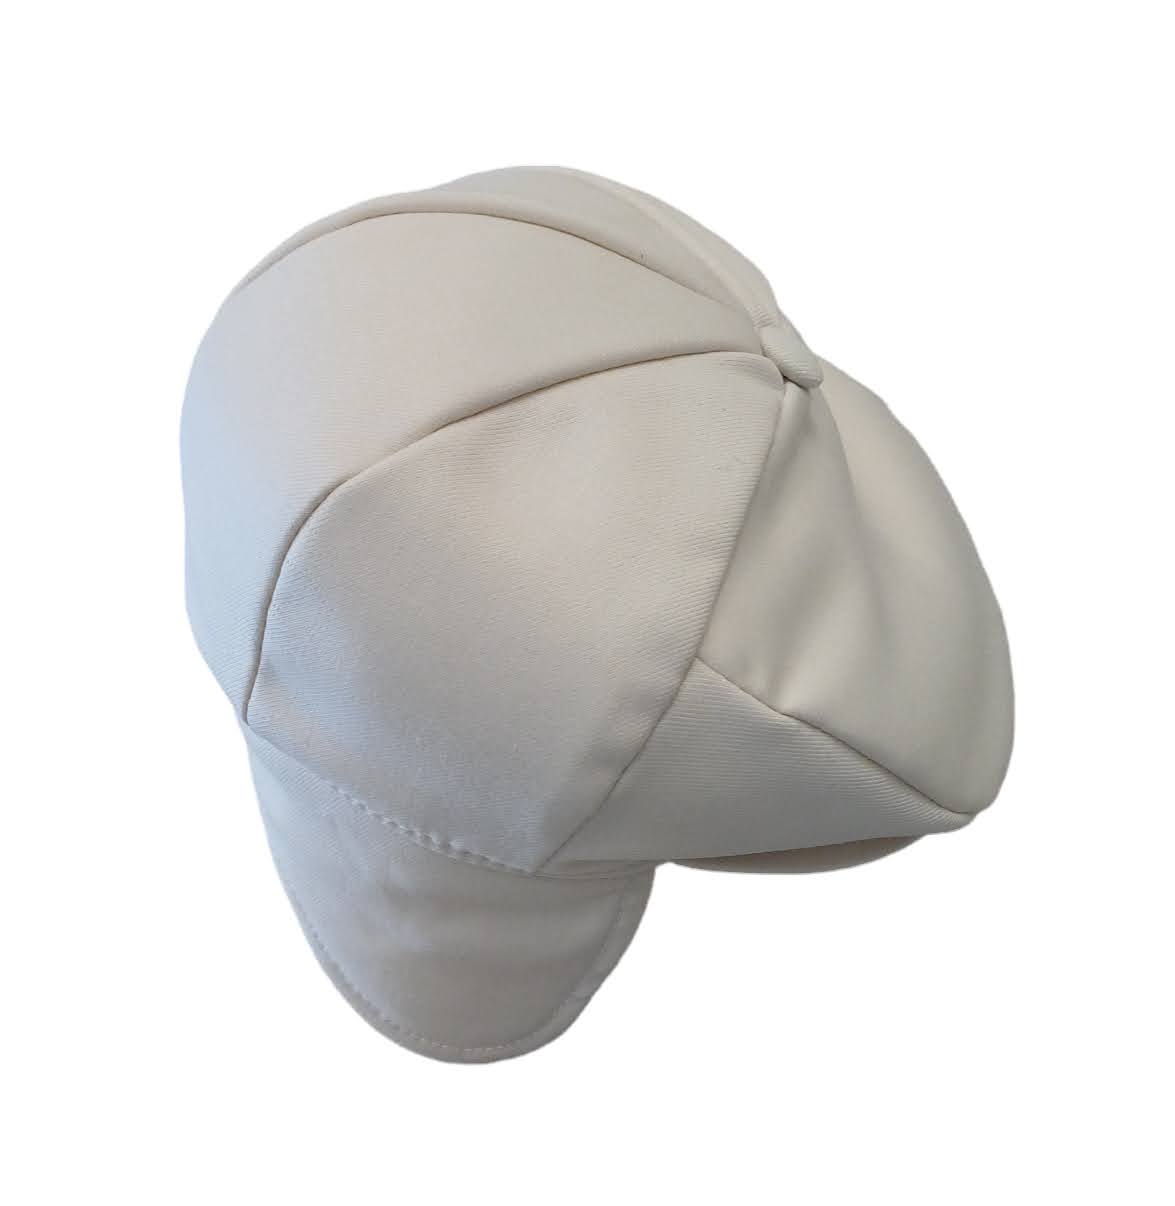 COLORICHIARI Light beige cap with earflaps